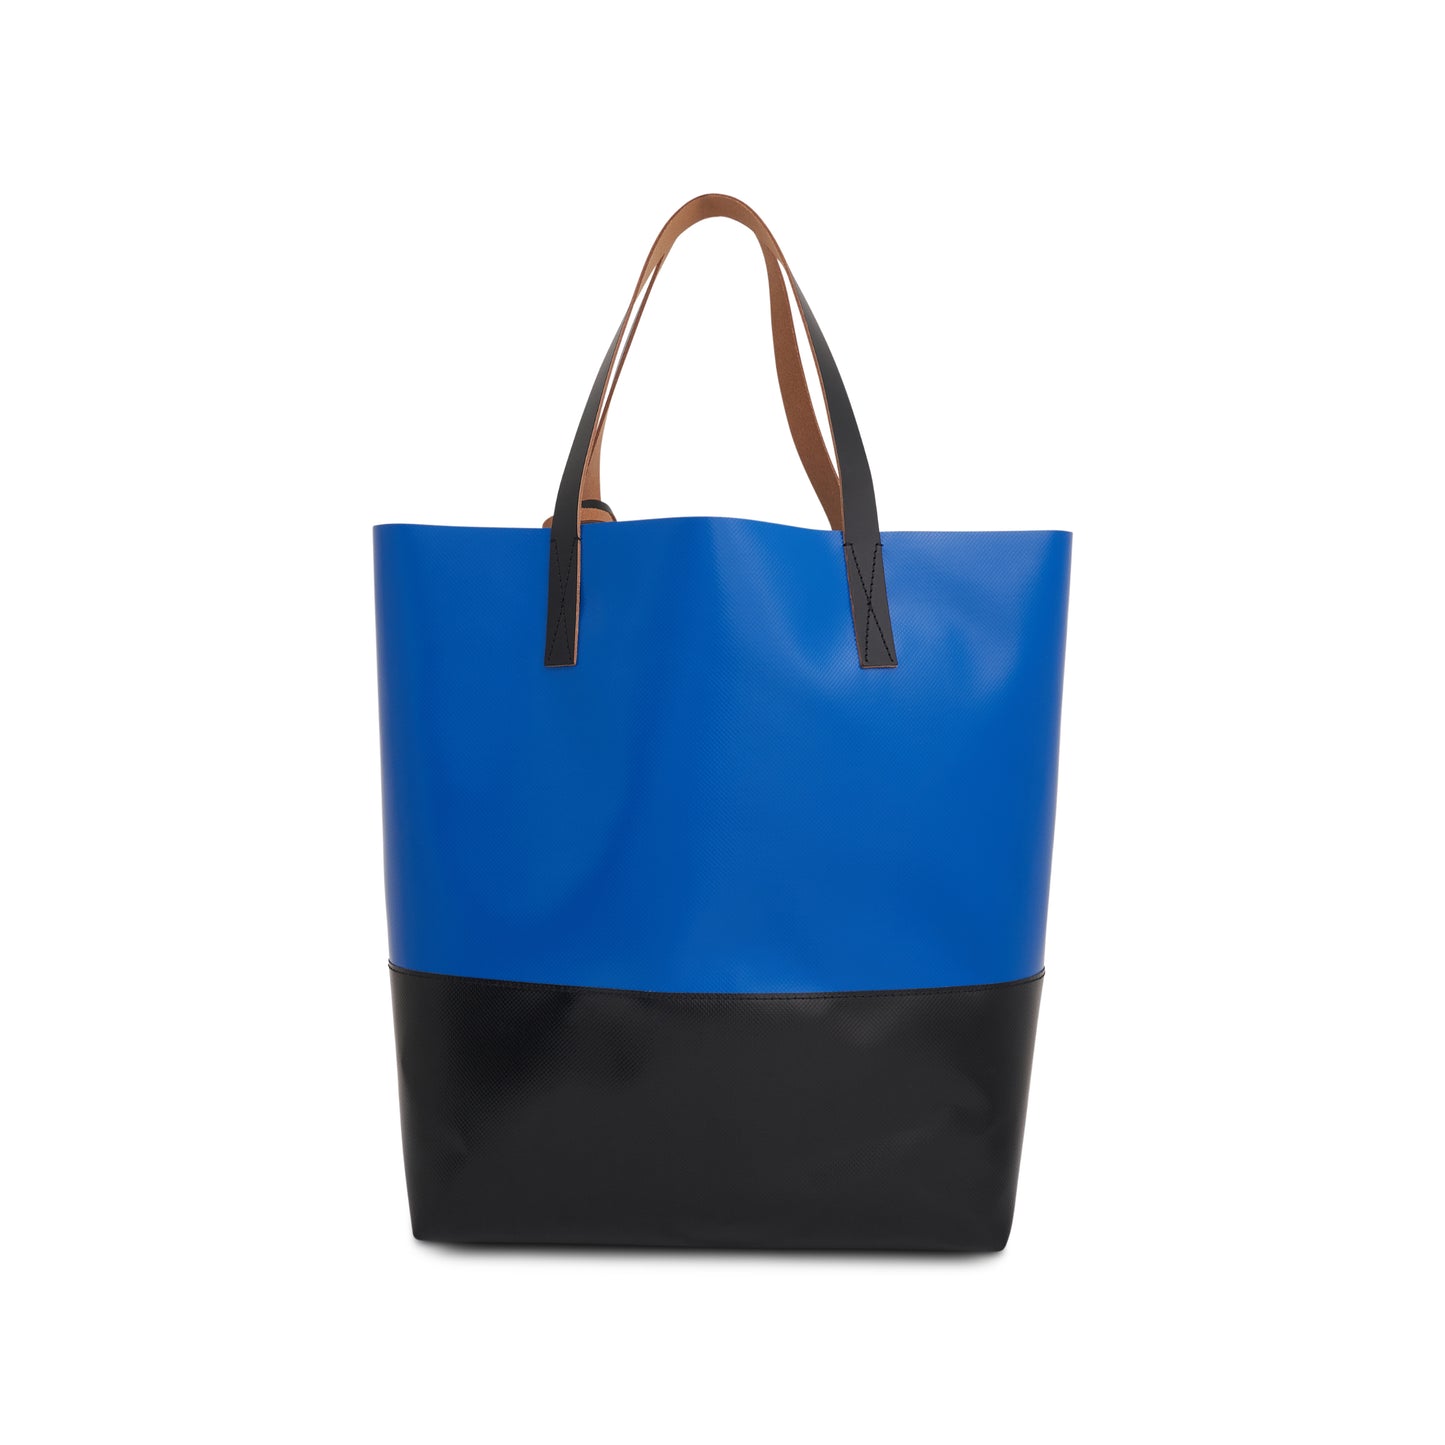 Tribeca Shopping Bag in Royal Blue/Black